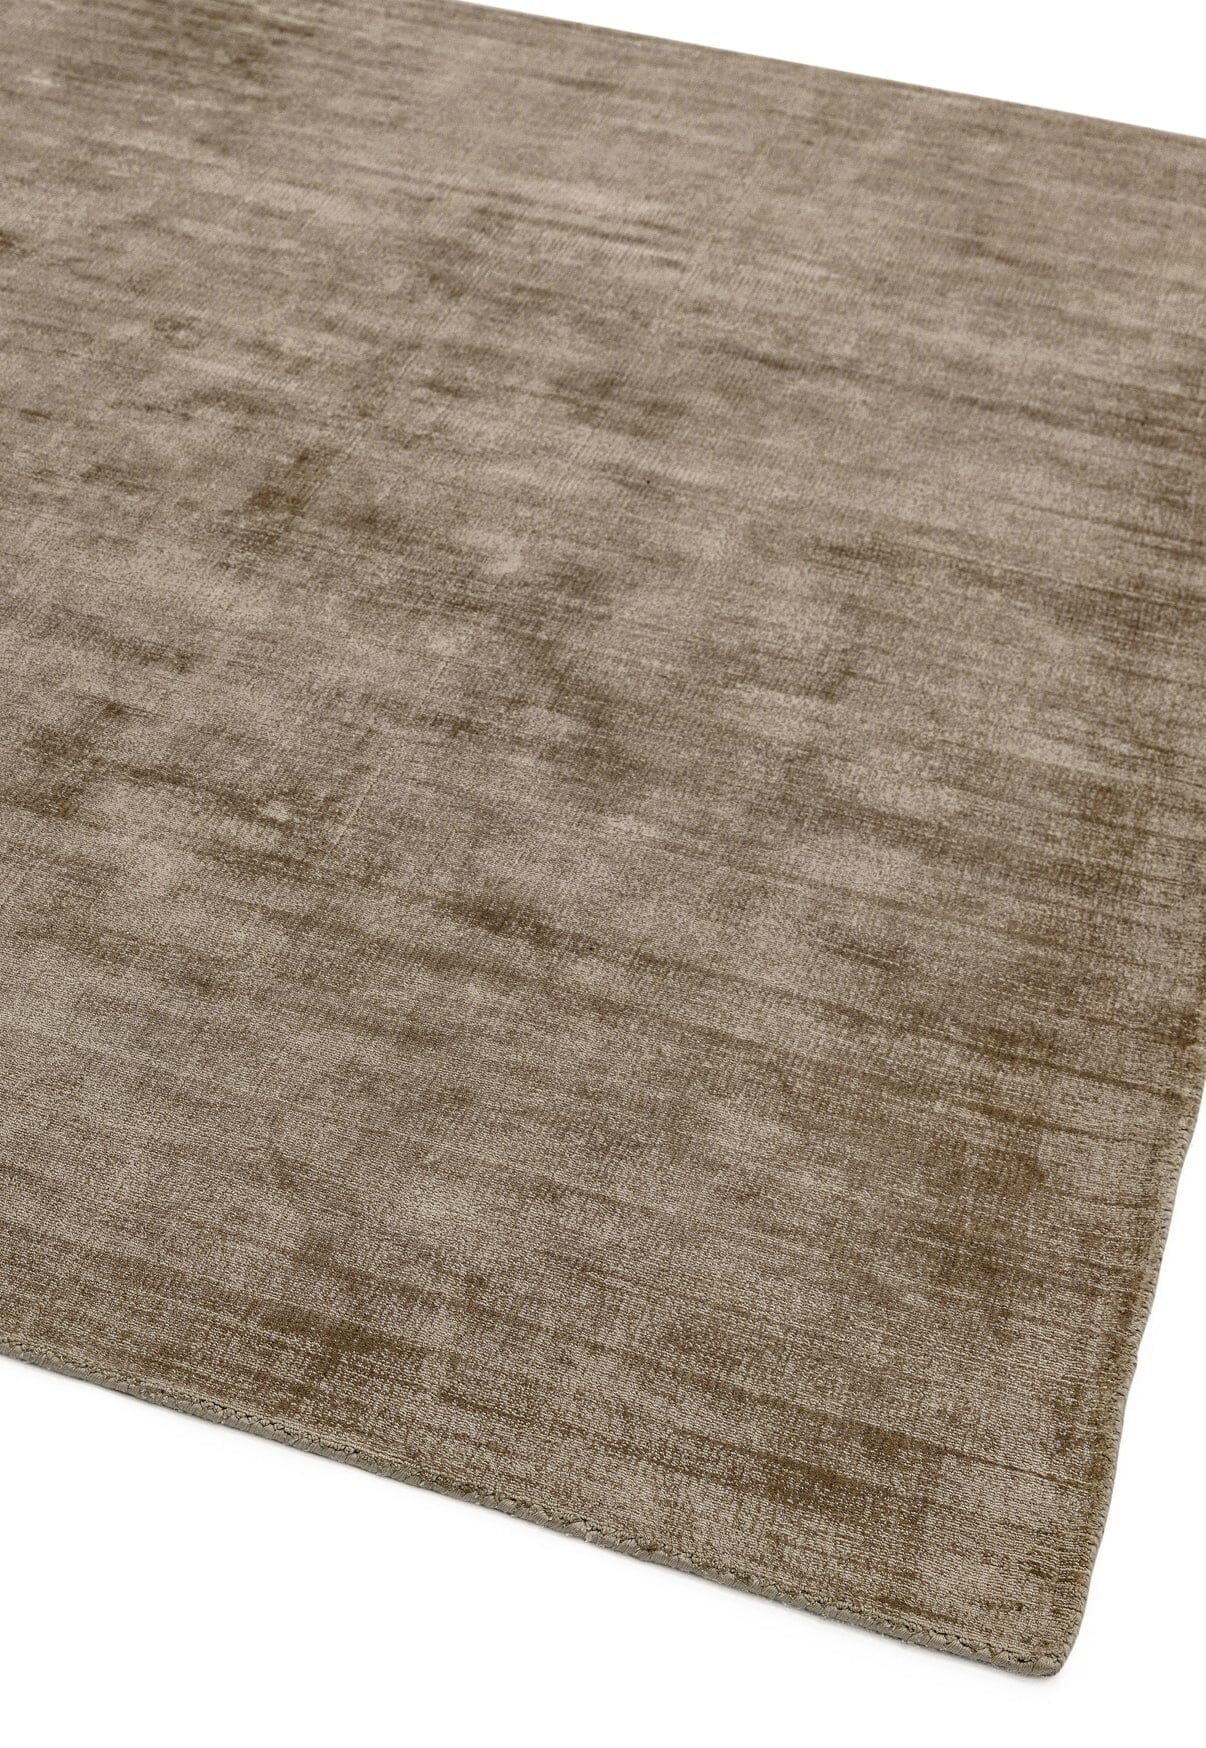 Asiatic Carpets Blade Hand Woven Rug Mocha - 200 x 290cm